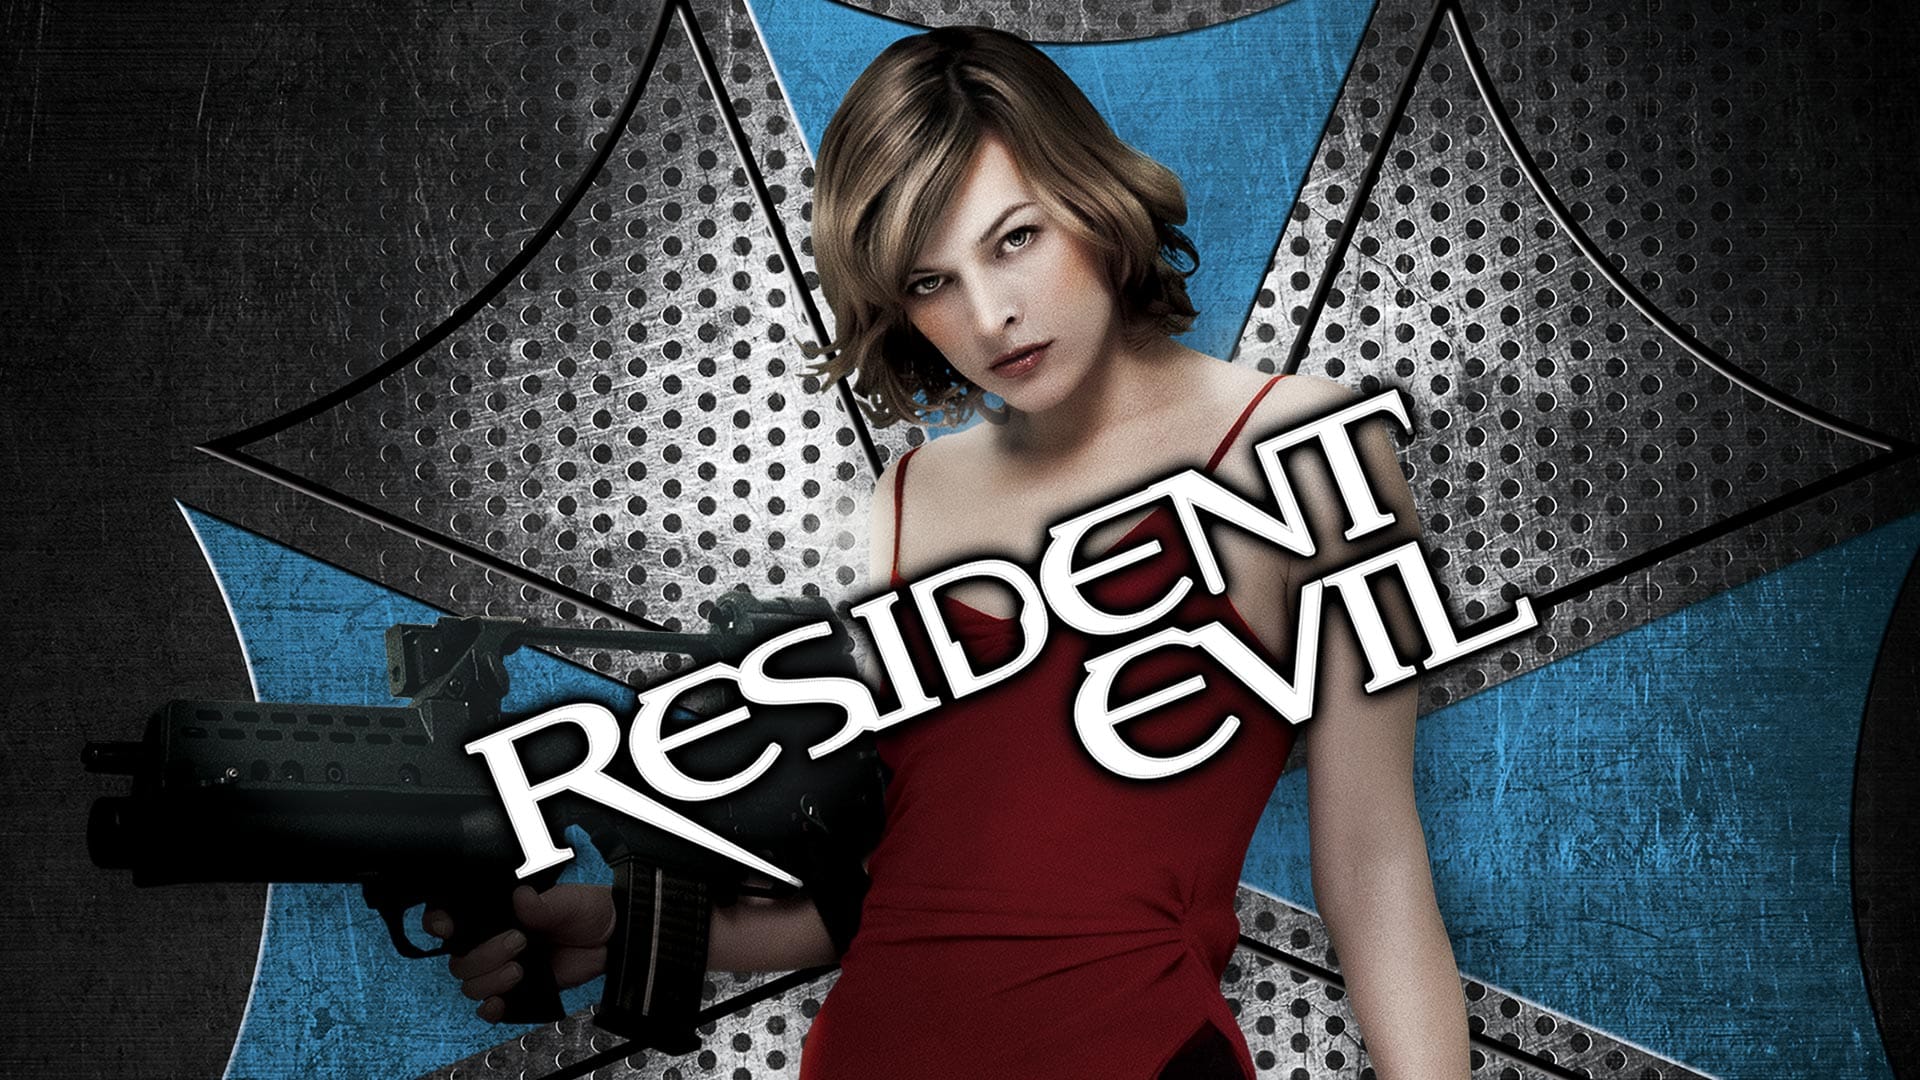 Watch Resident Evil Online | Stream Full Movies